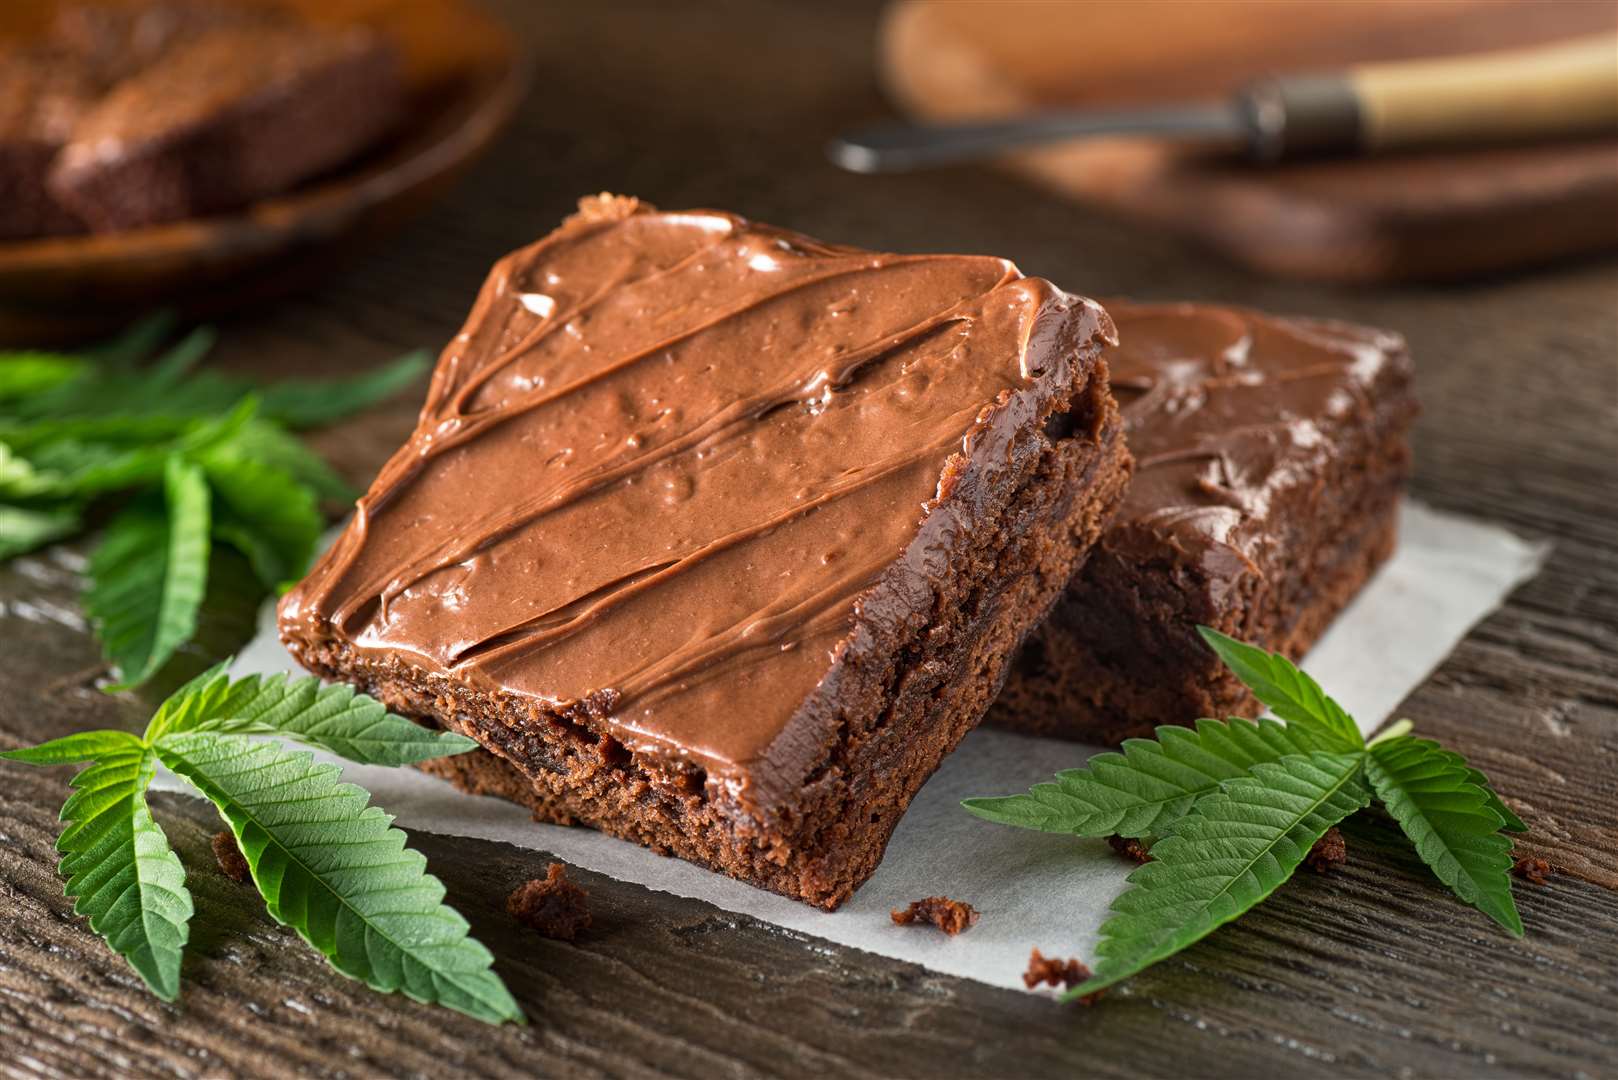 The mum-of-three said she had unwittingly eaten a cannabis brownie. Stock image